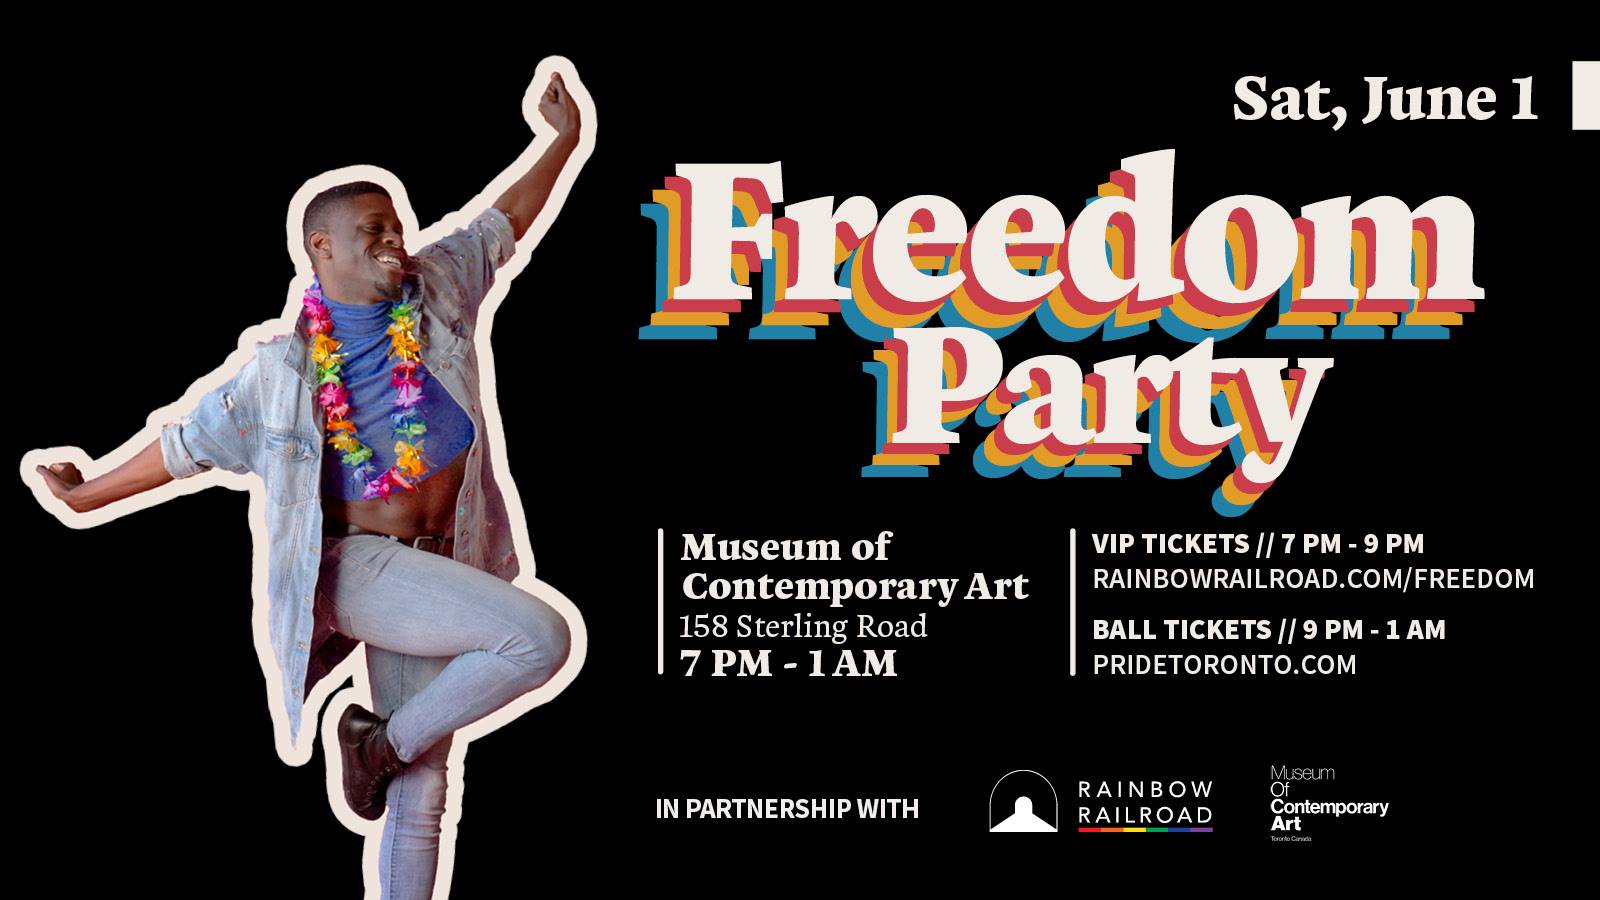 Freedom Party QueerEvents.ca